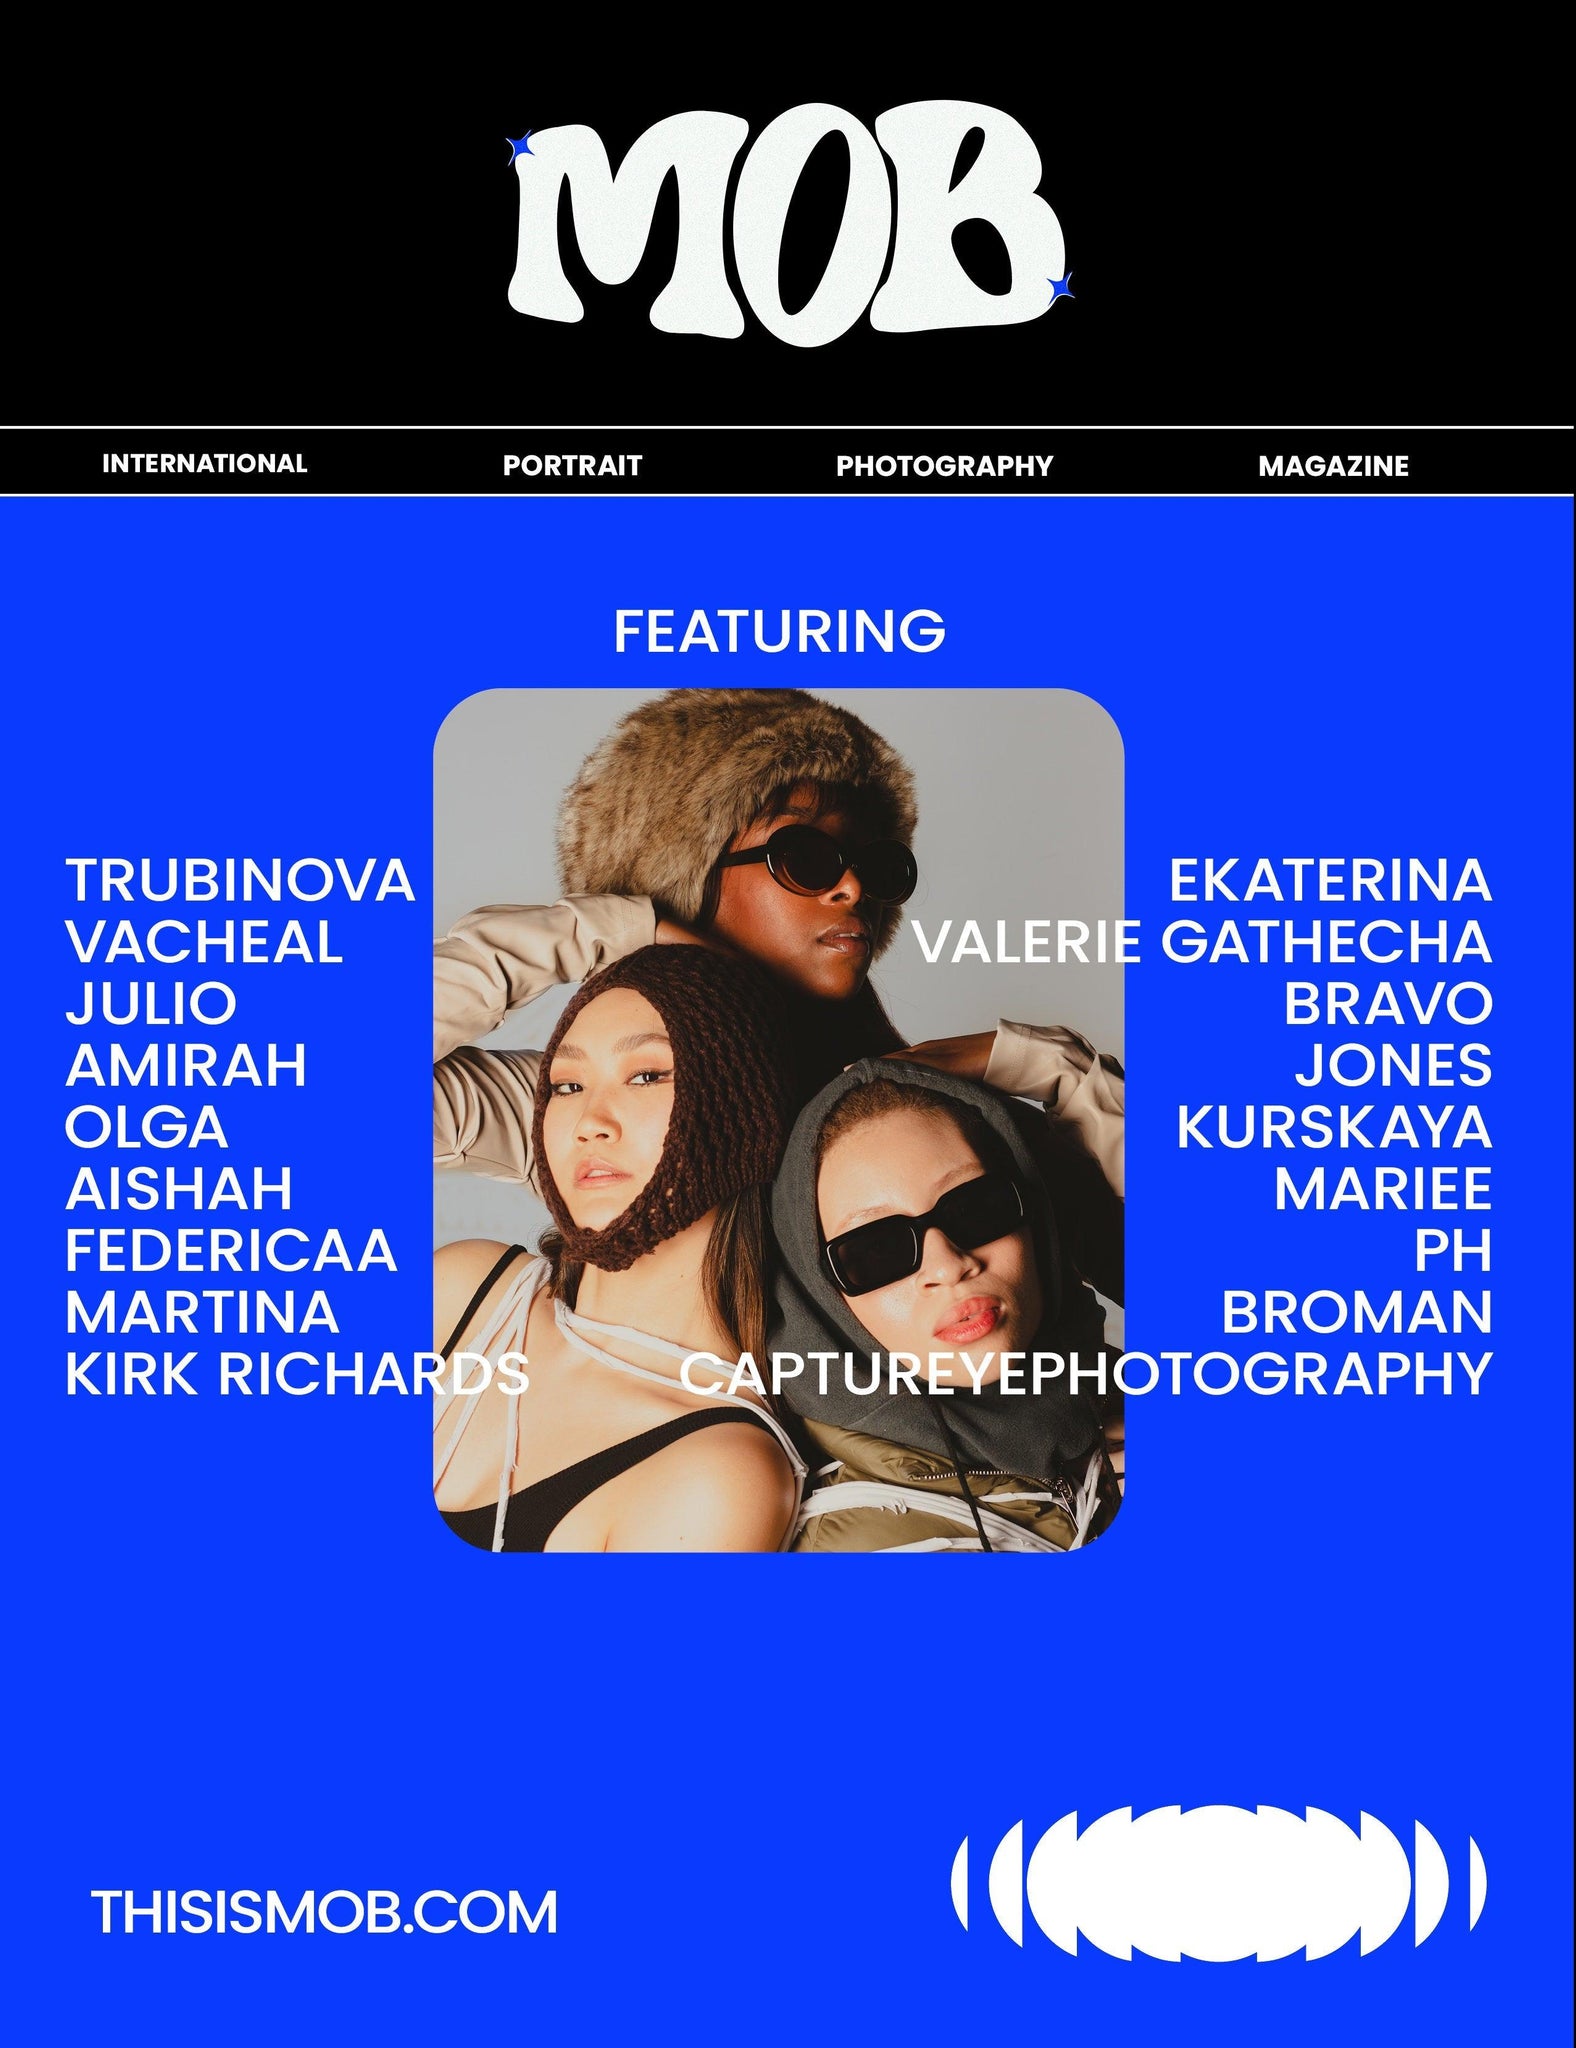 MOB JOURNAL | VOLUME TWENTY SIX | ISSUE #35 - Mob Journal